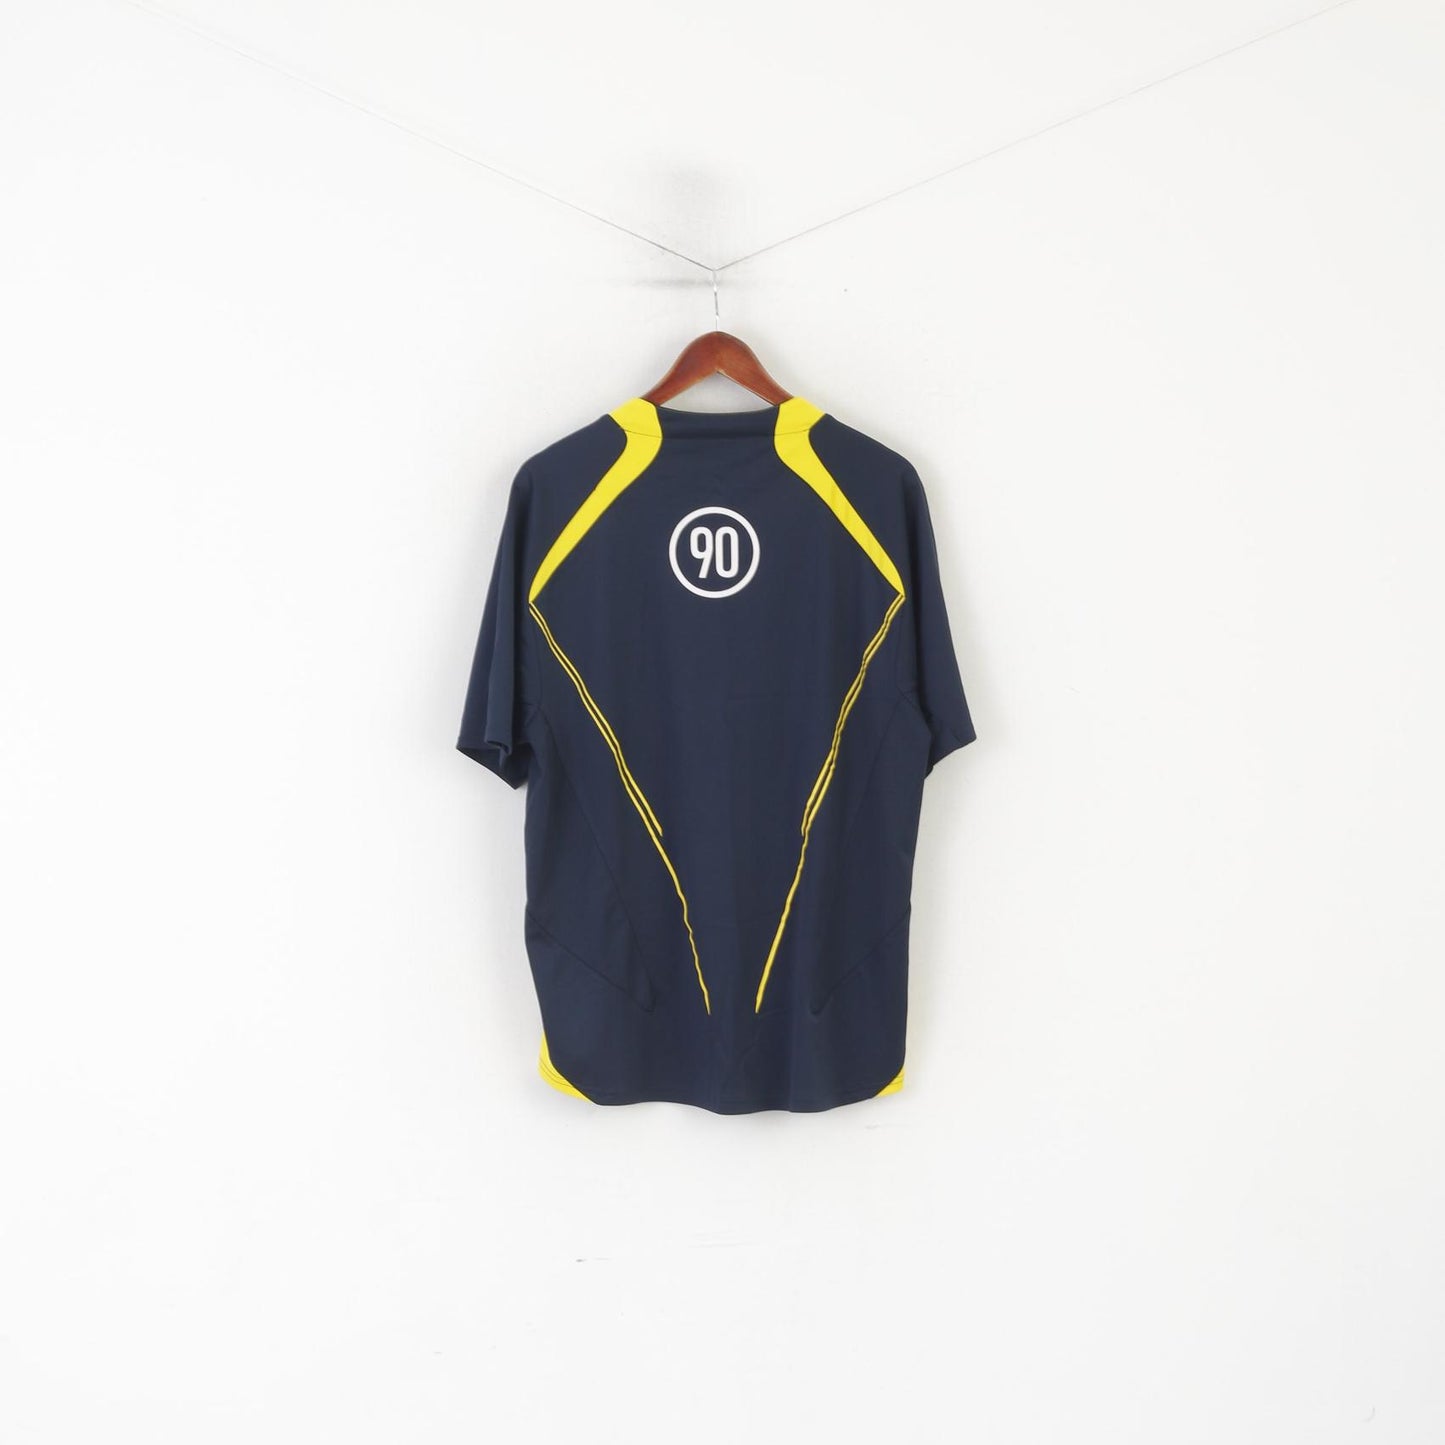 Nike Men L 183 Shirt Navy Dri-Fit Football Training Sportswear Jersey Vintage Top